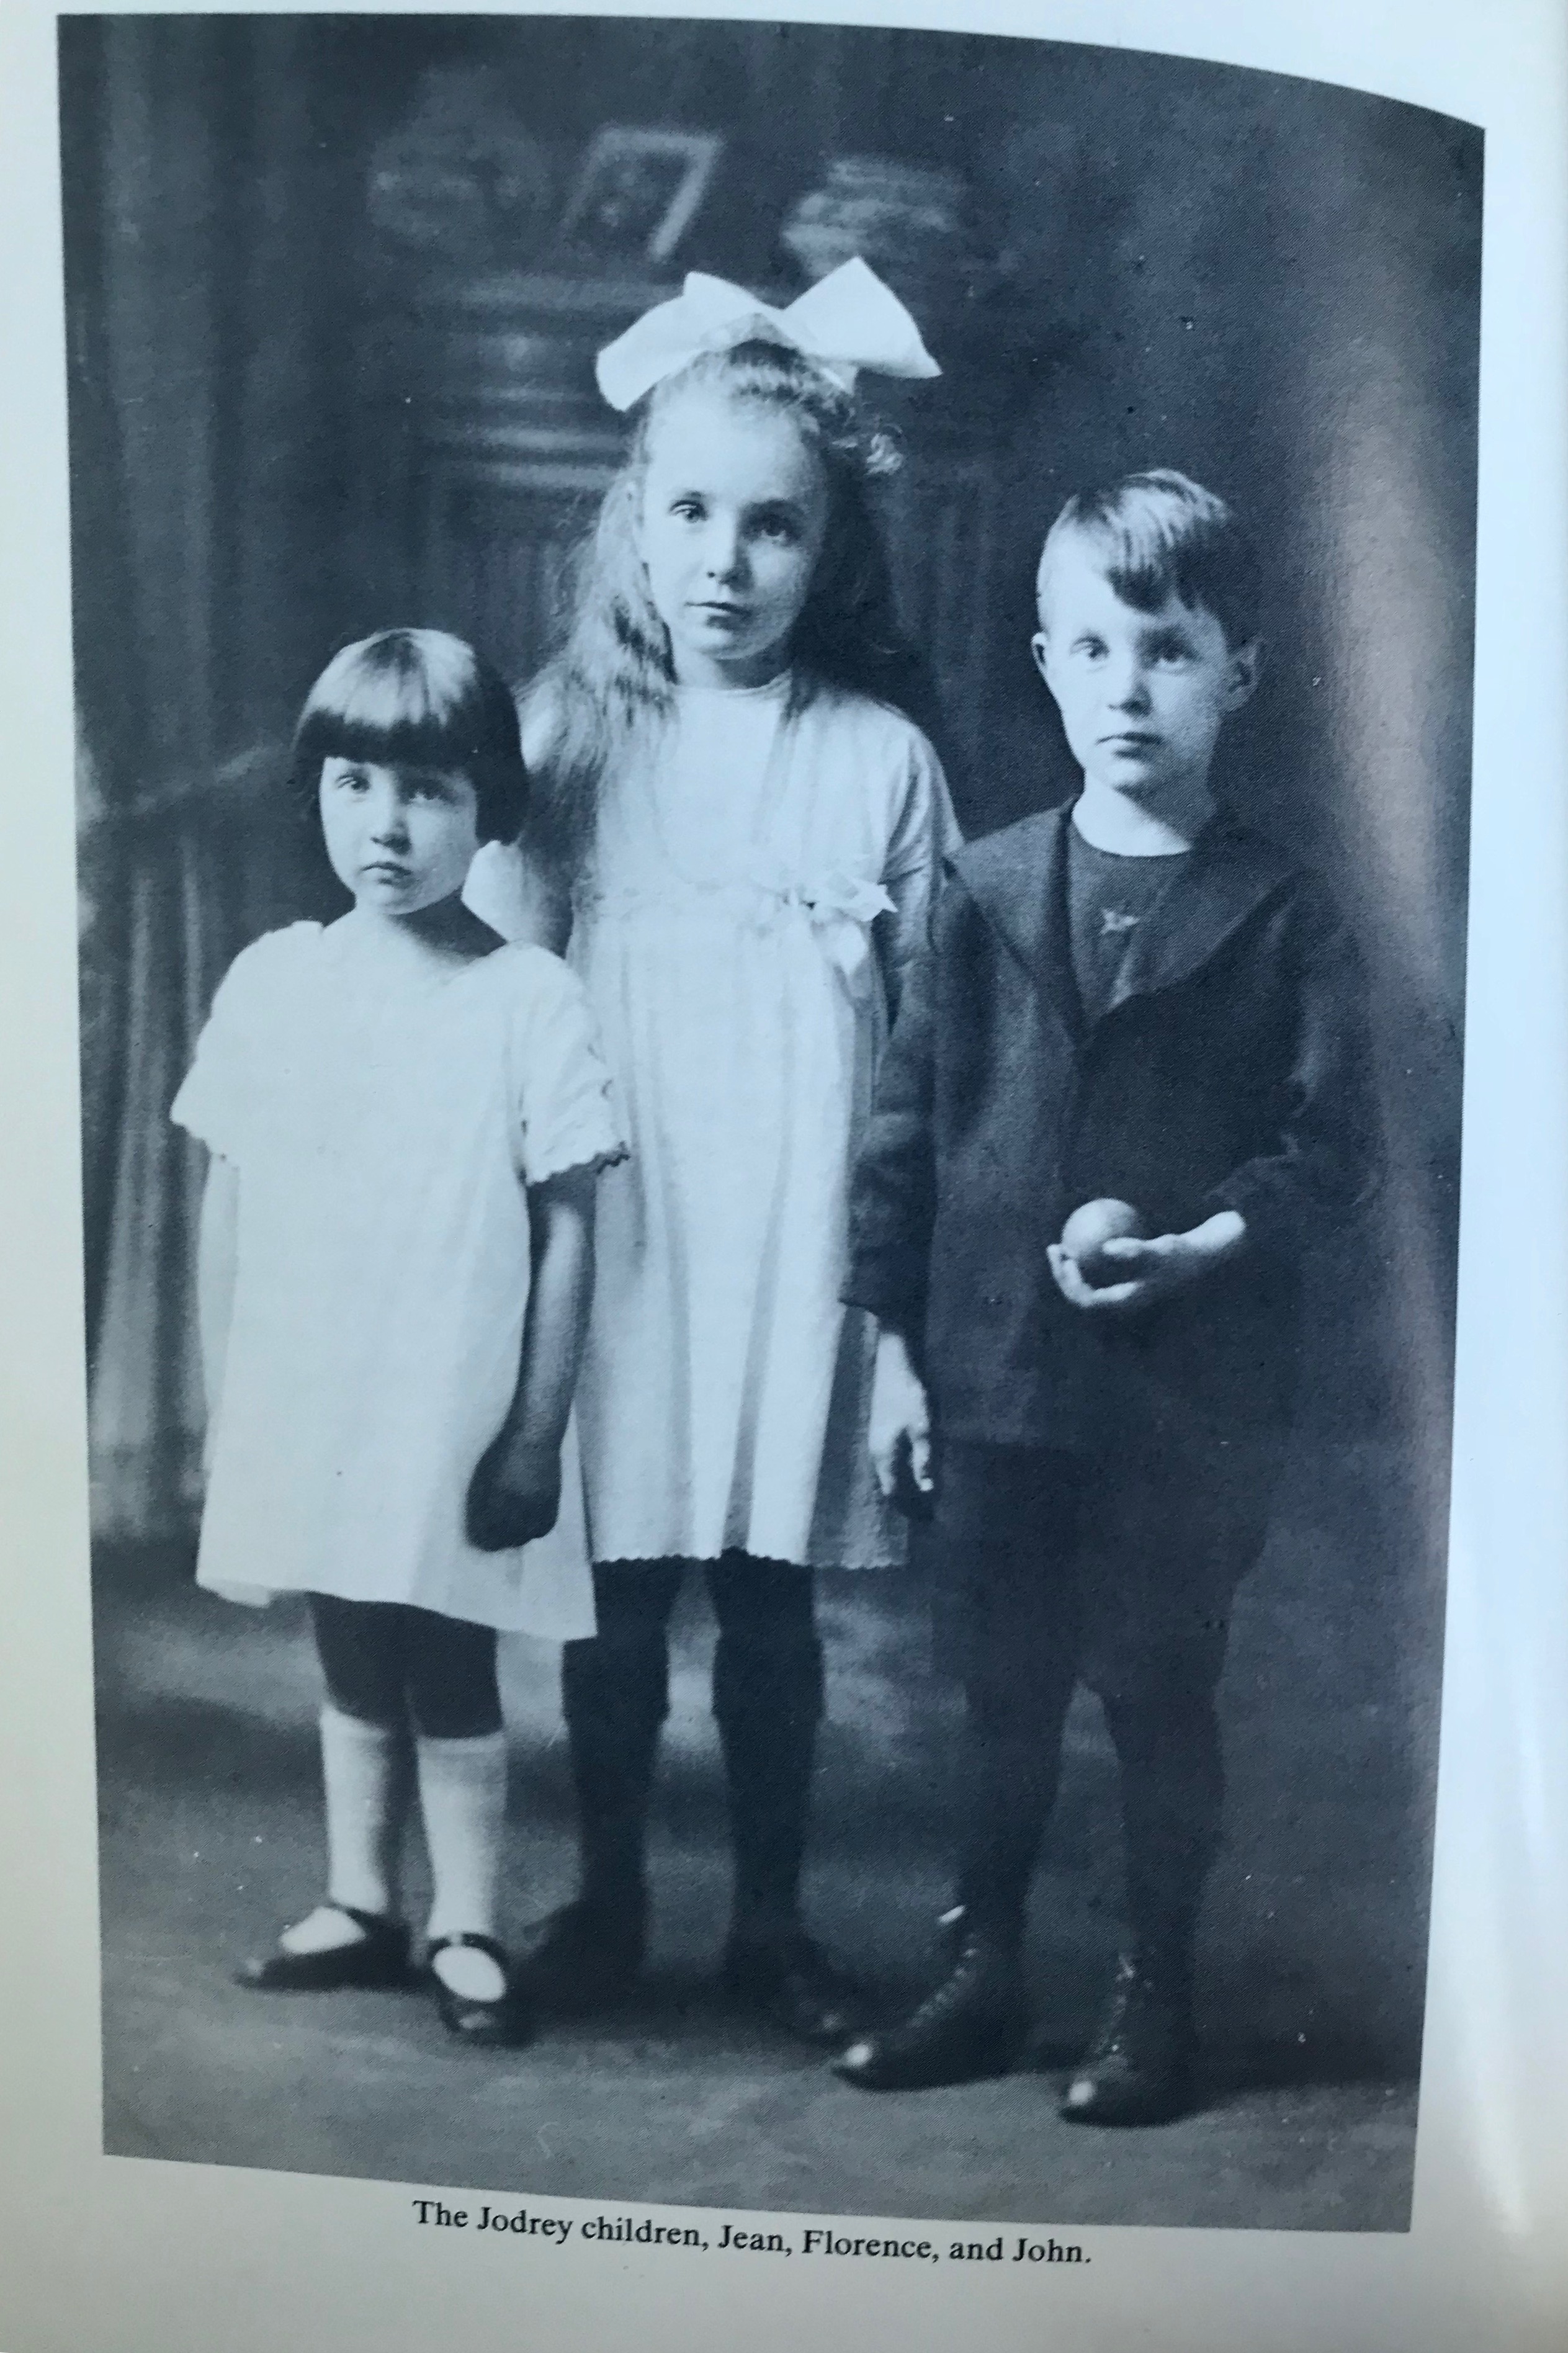 The Jodrey children, Jean, Florence and John